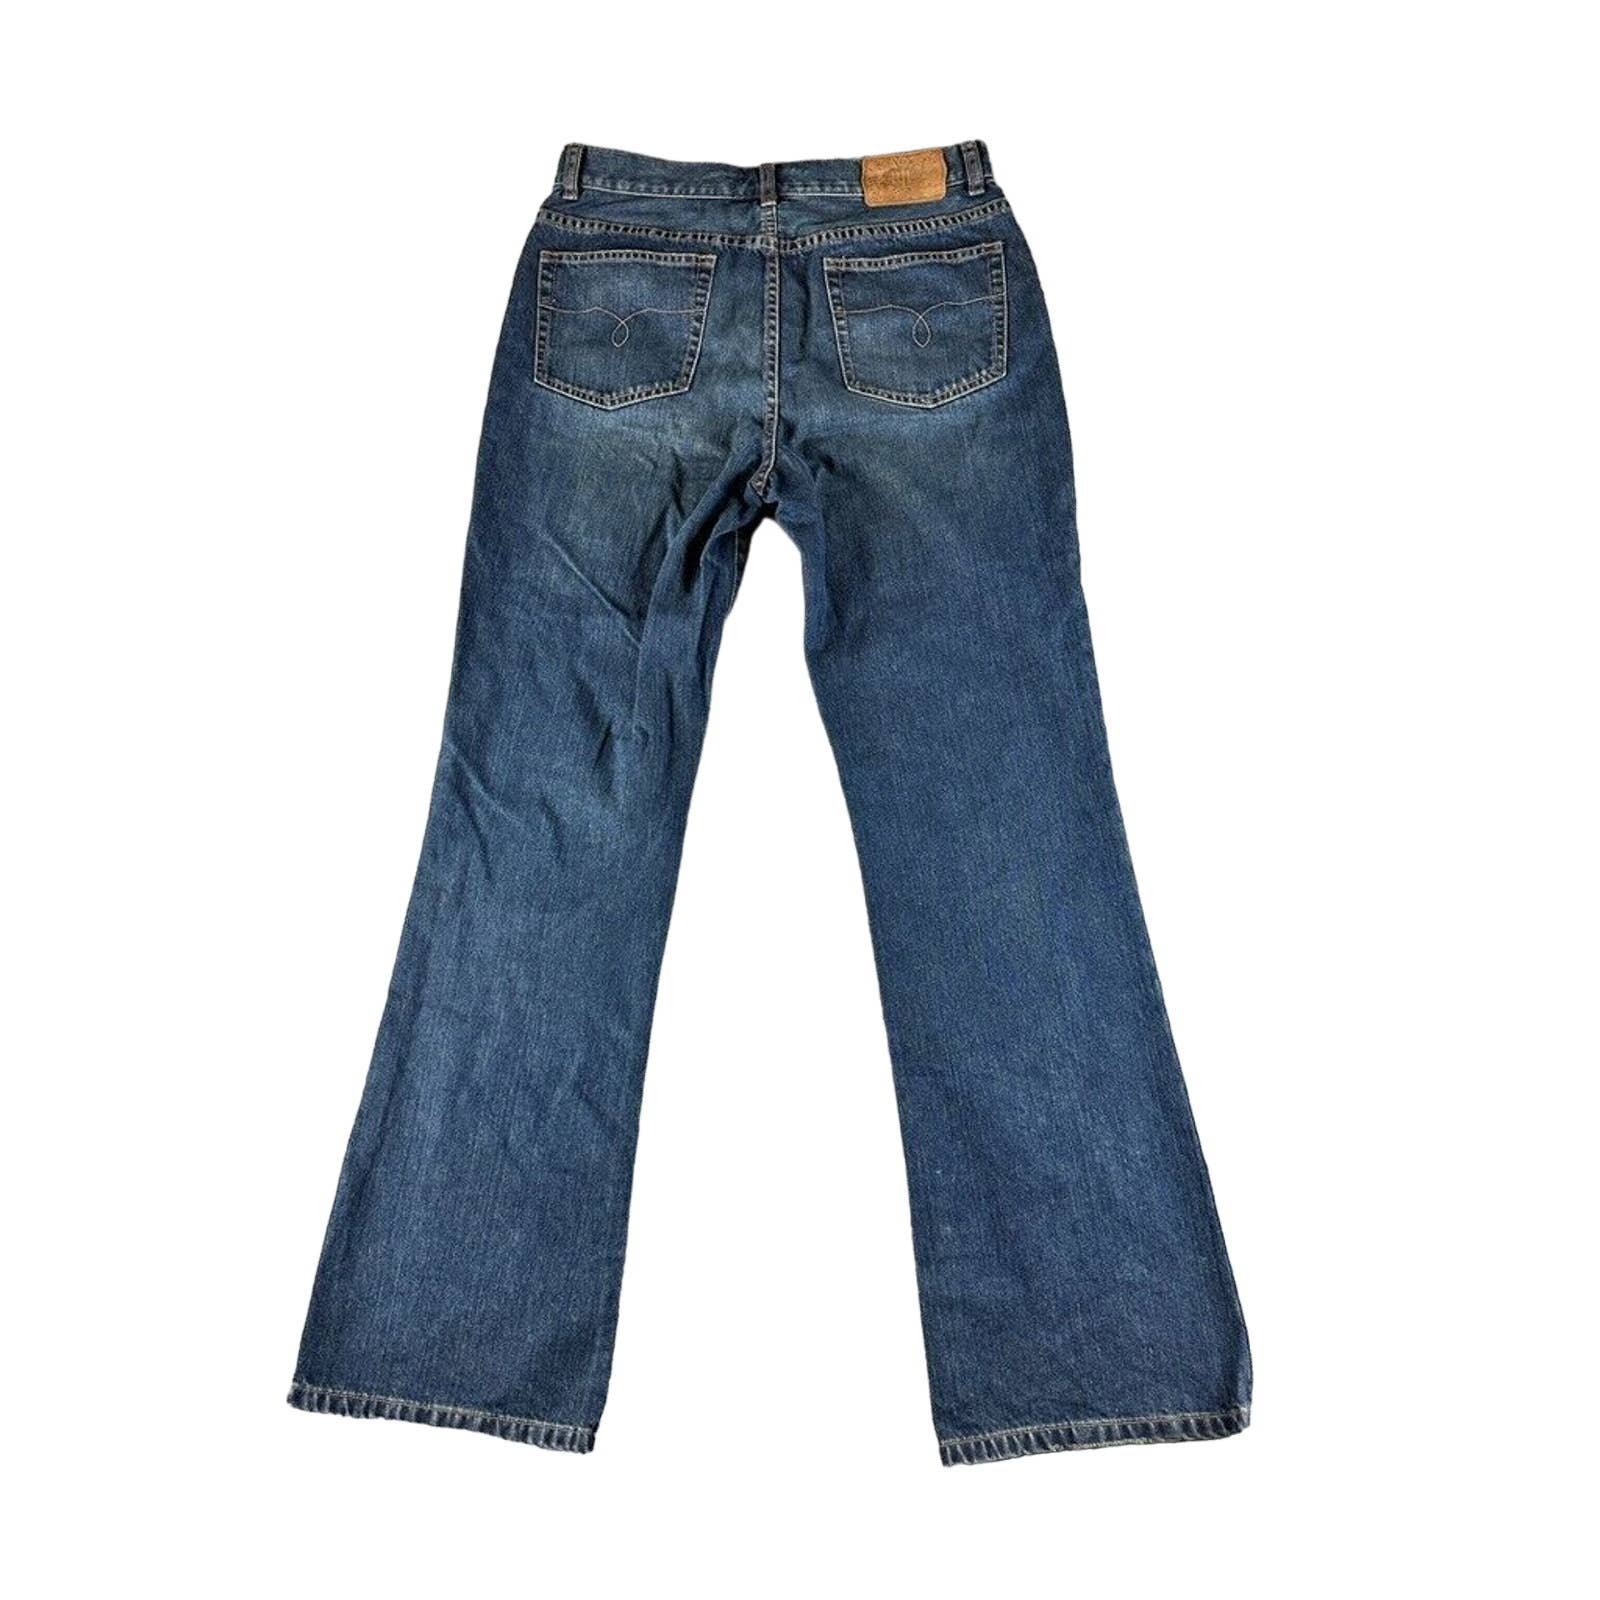 Promotions  RLL Lauren Jeans Co Women´s Premium Jeans by Ralph Lauren size 8 EUC kKLYmbCrW well sale